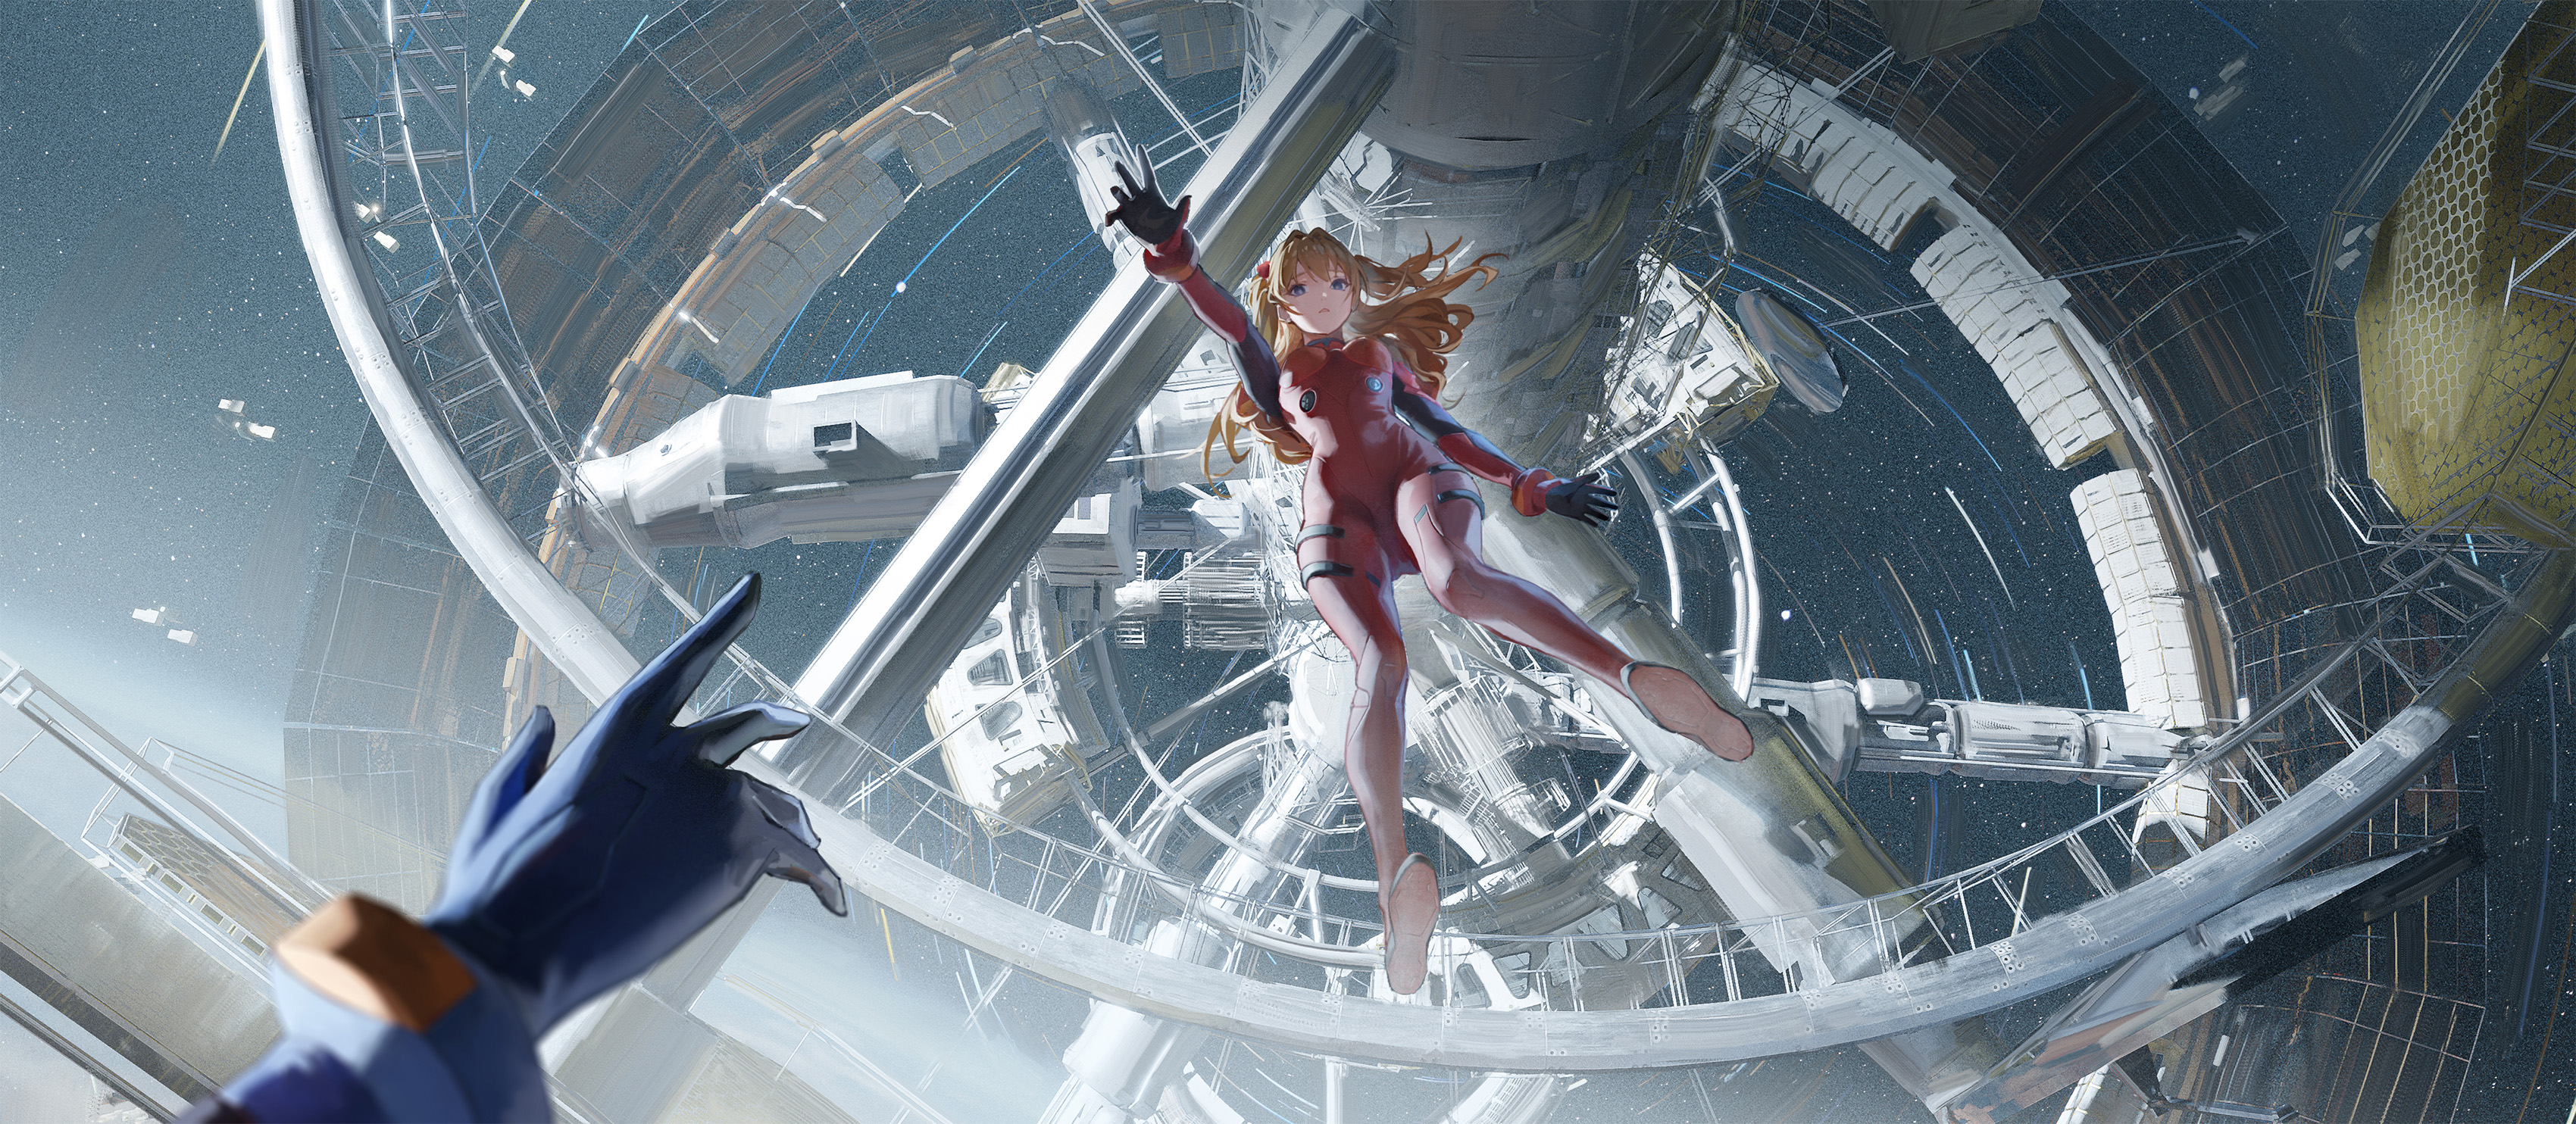 Anime Asuka Langley Soryu Neon Genesis Evangelion Falling Top View Arms Reaching Bodysuit Space Stat 3400x1484